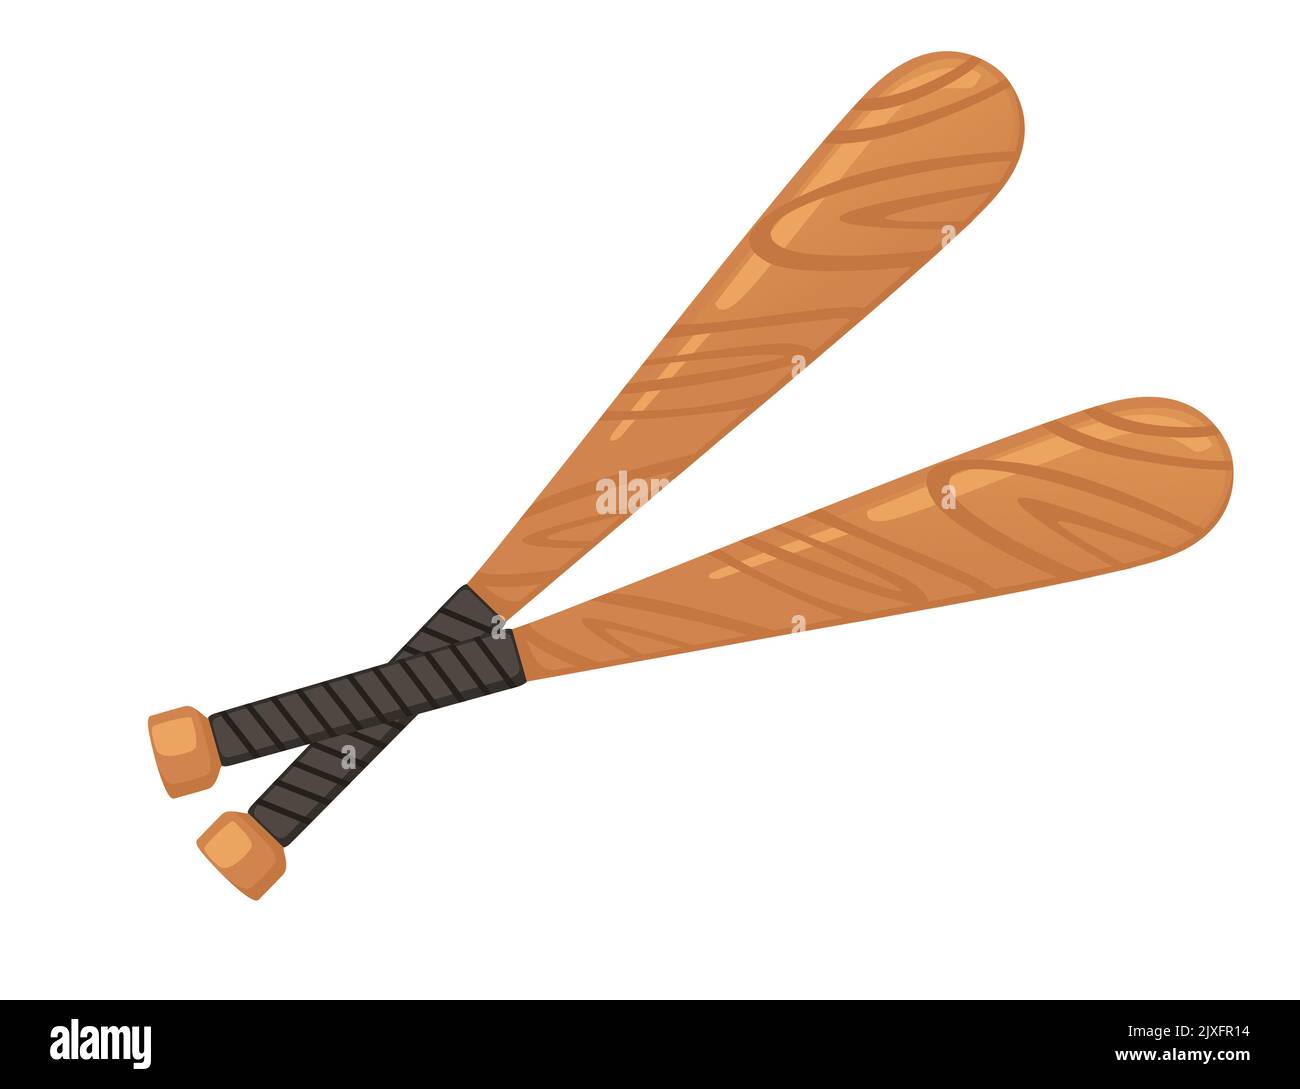 Wooden baseball bat vector illustration isolated on white background Stock Vector